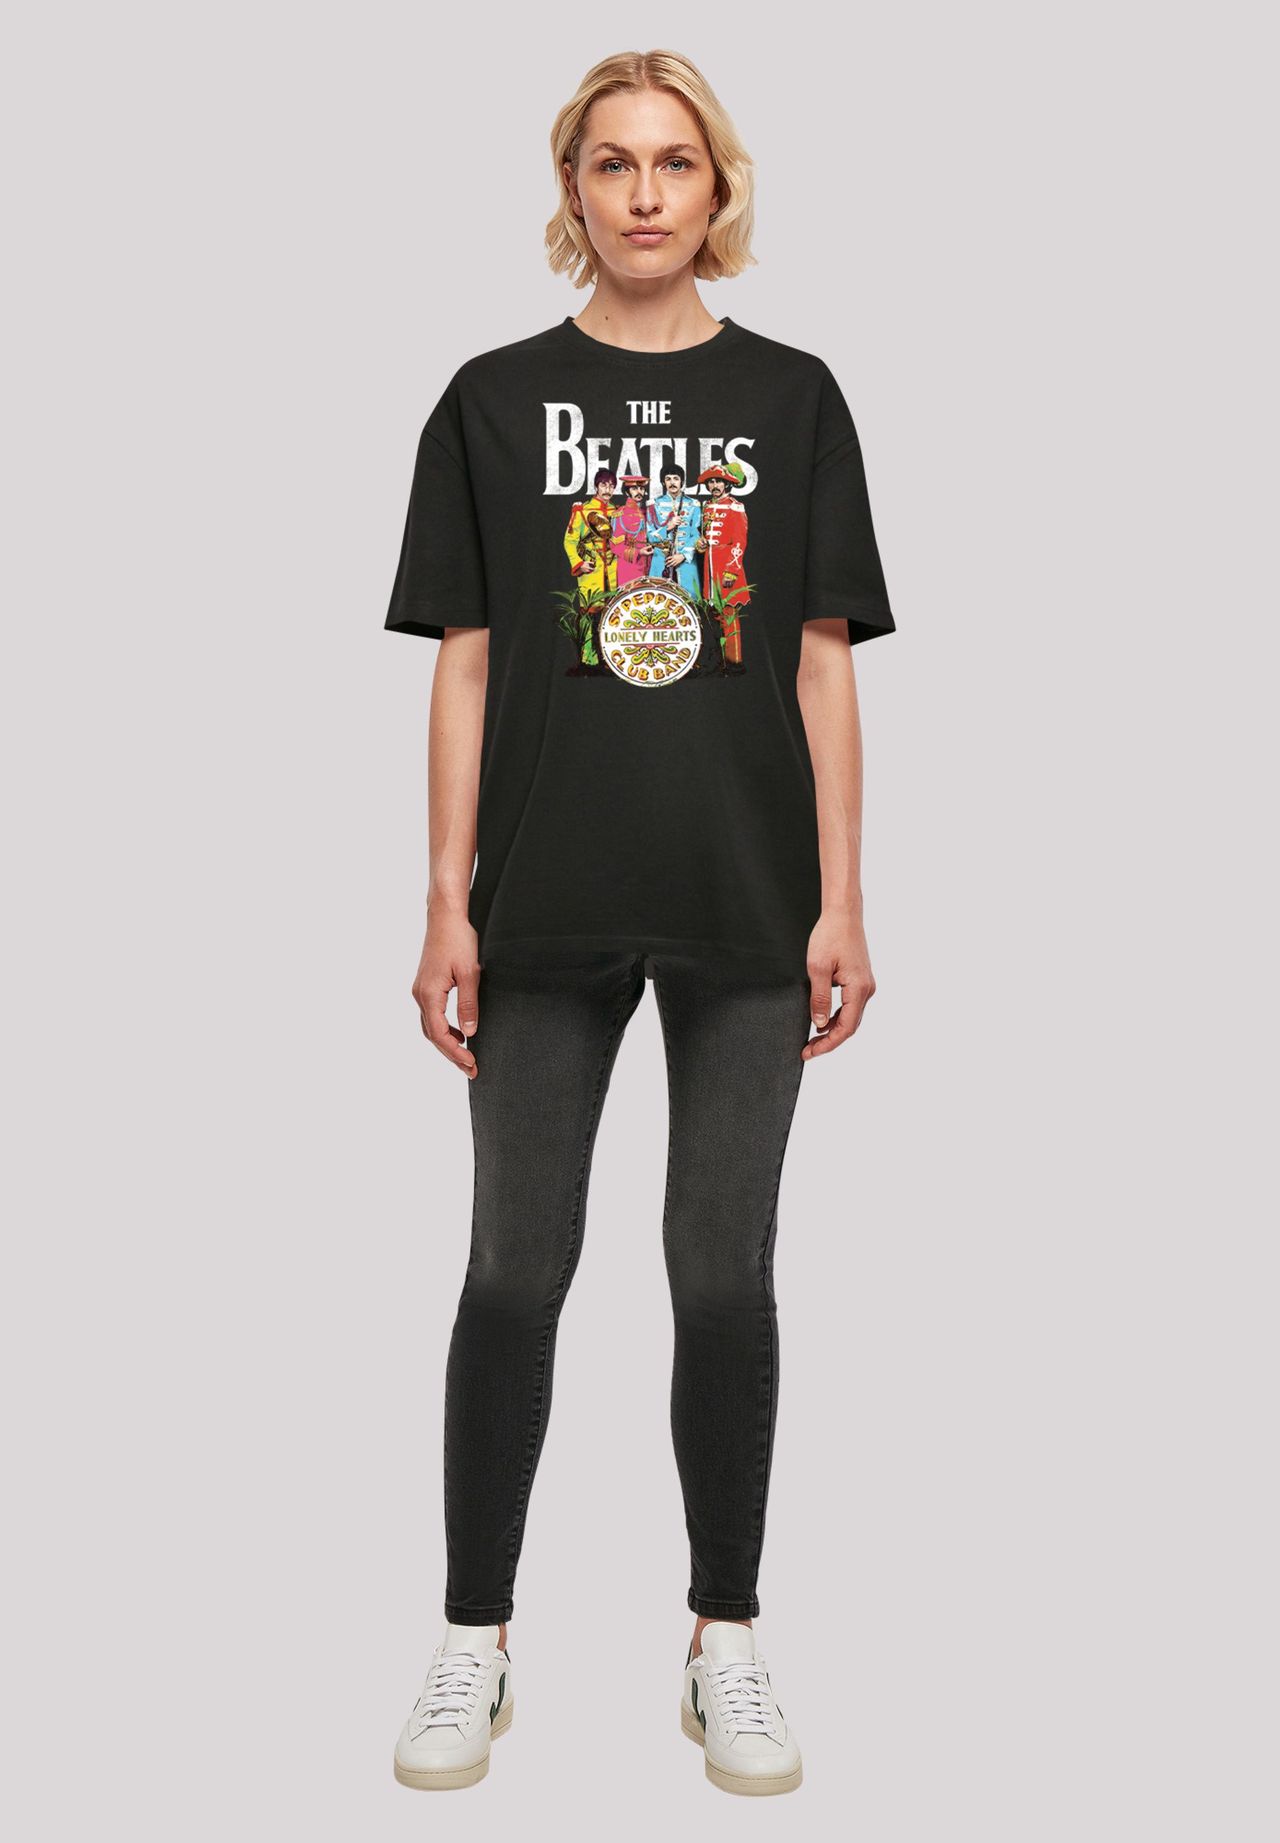 F4NT4STIC Oversized Boyfriend GALERIA | T-Shirt Pepper Black The Sgt Band Beatles